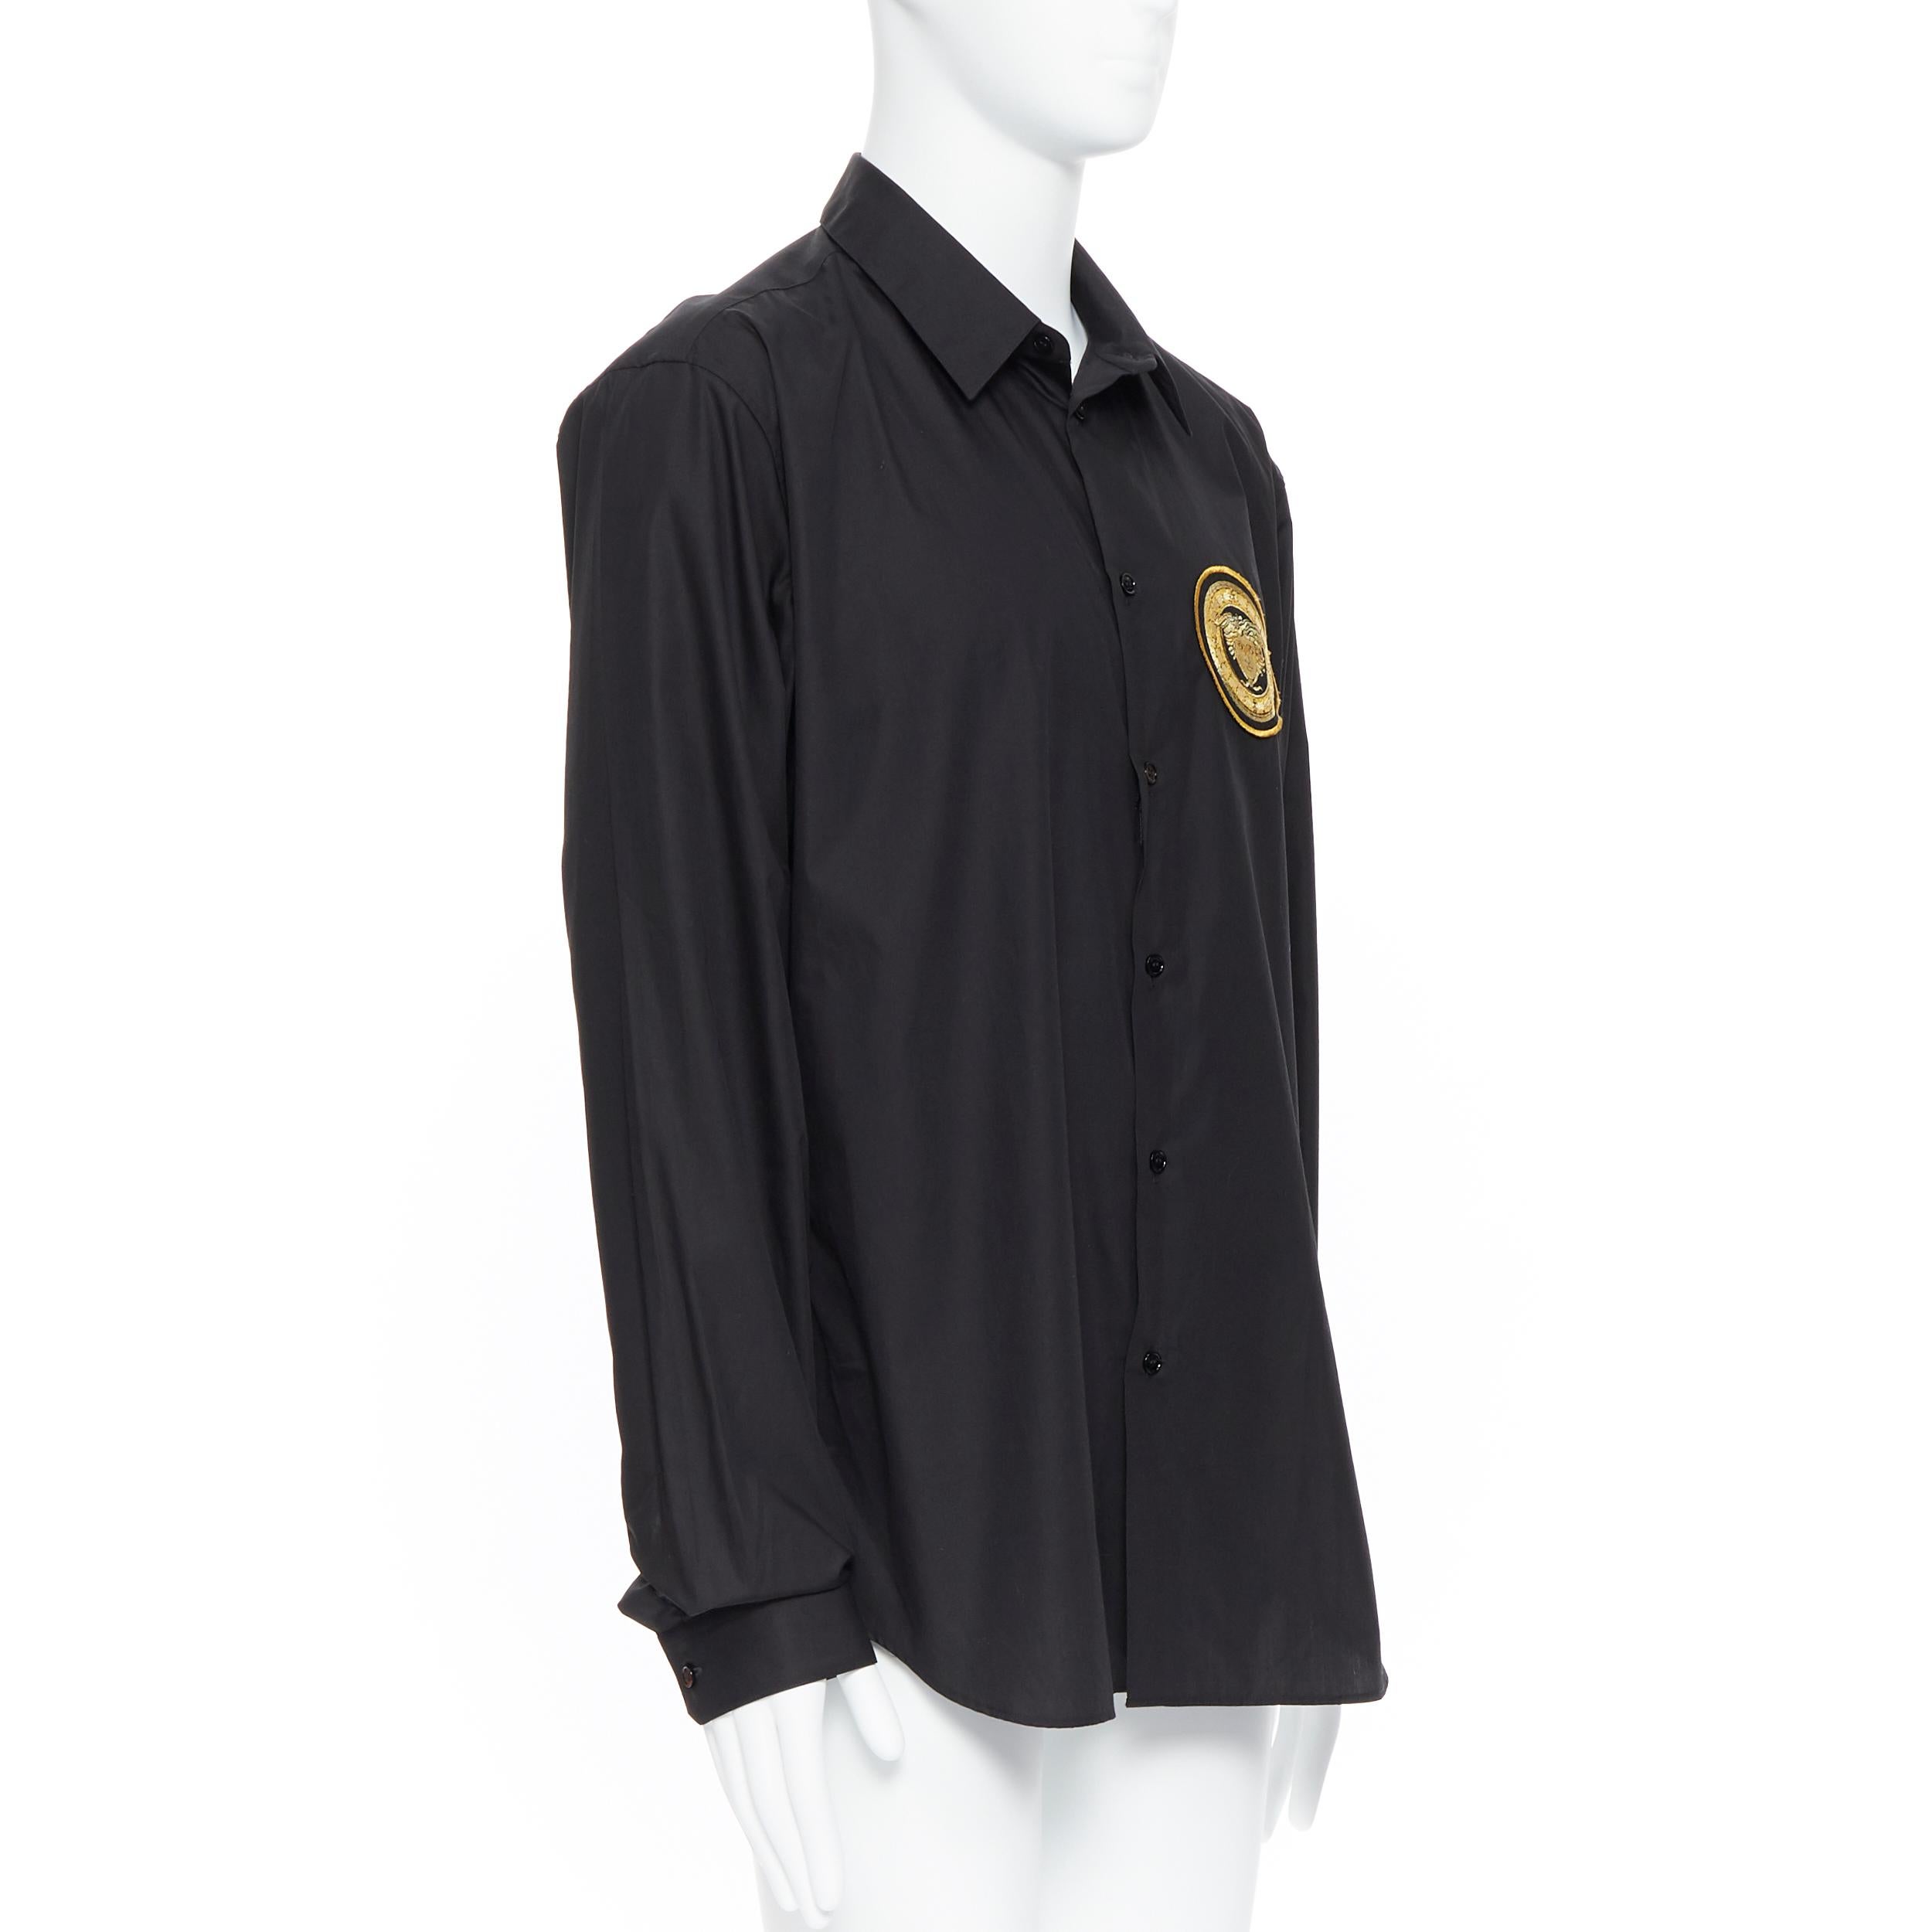 Black new VERSACE 2019 black cotton gold Medusa embroidery long sleeve shirt EU44 XXXL